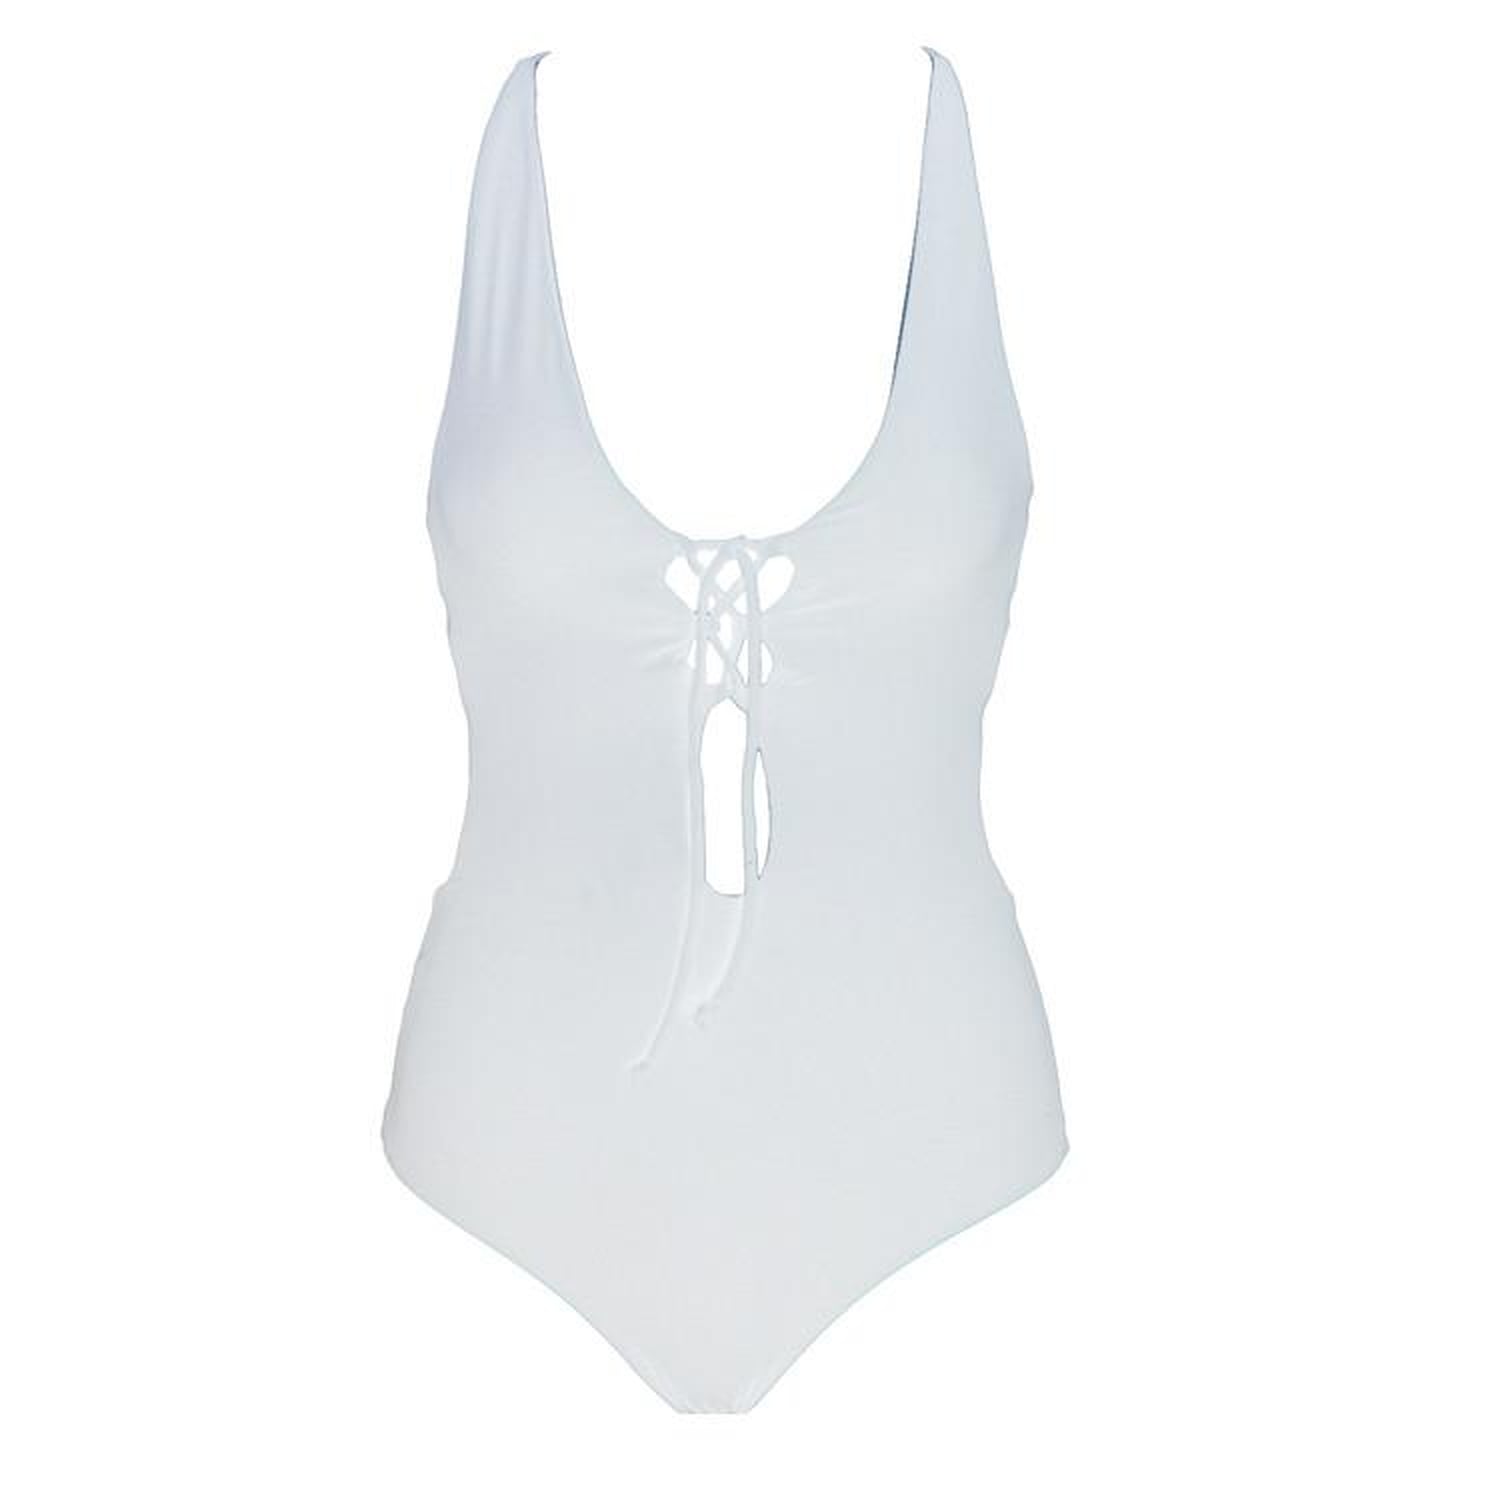 Chrissy Teigen's White One-Piece Swimsuit January 2019 | POPSUGAR Fashion